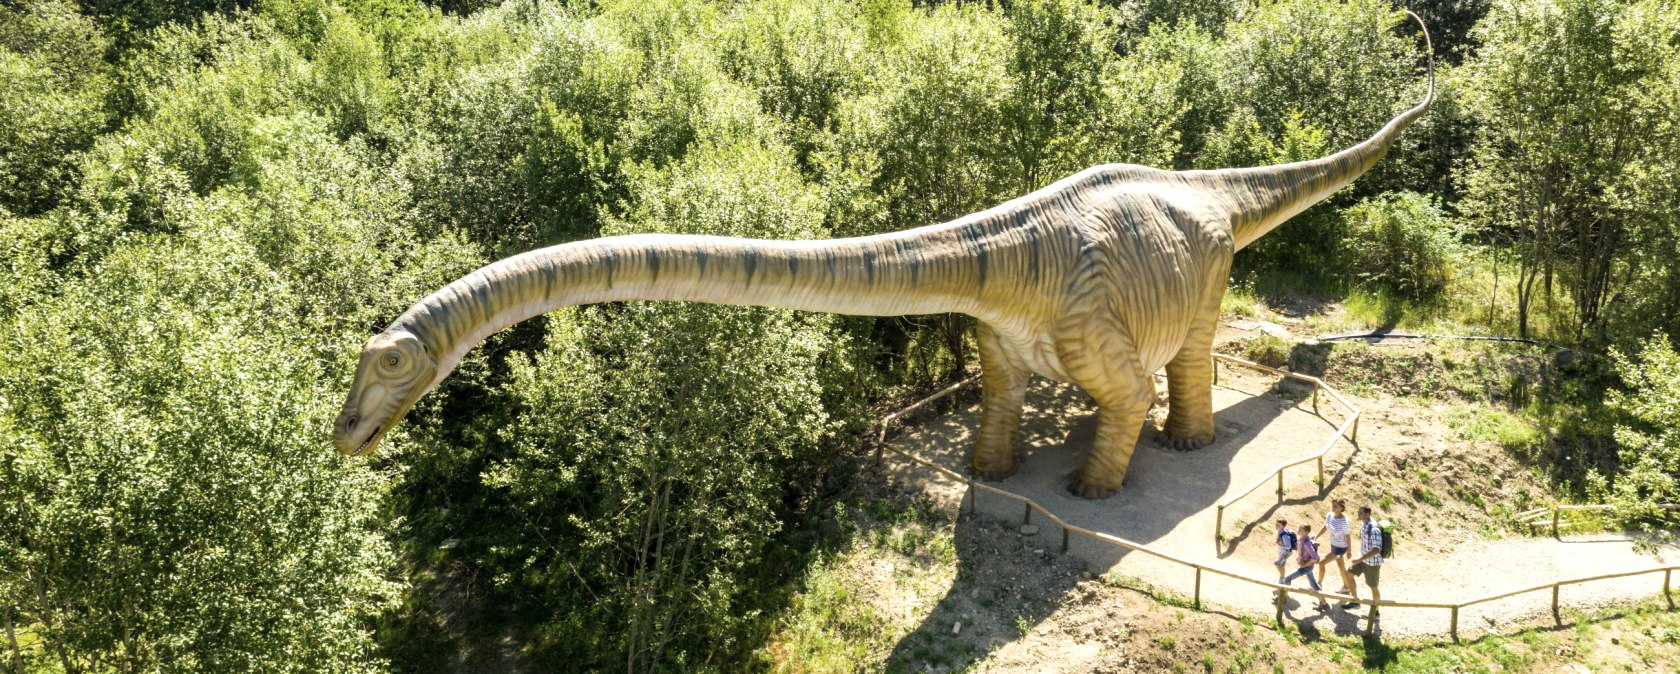 Dinosaurierpark Teufelsschlucht in der Eifel, © Felsenland Südeifel, D. Ketz